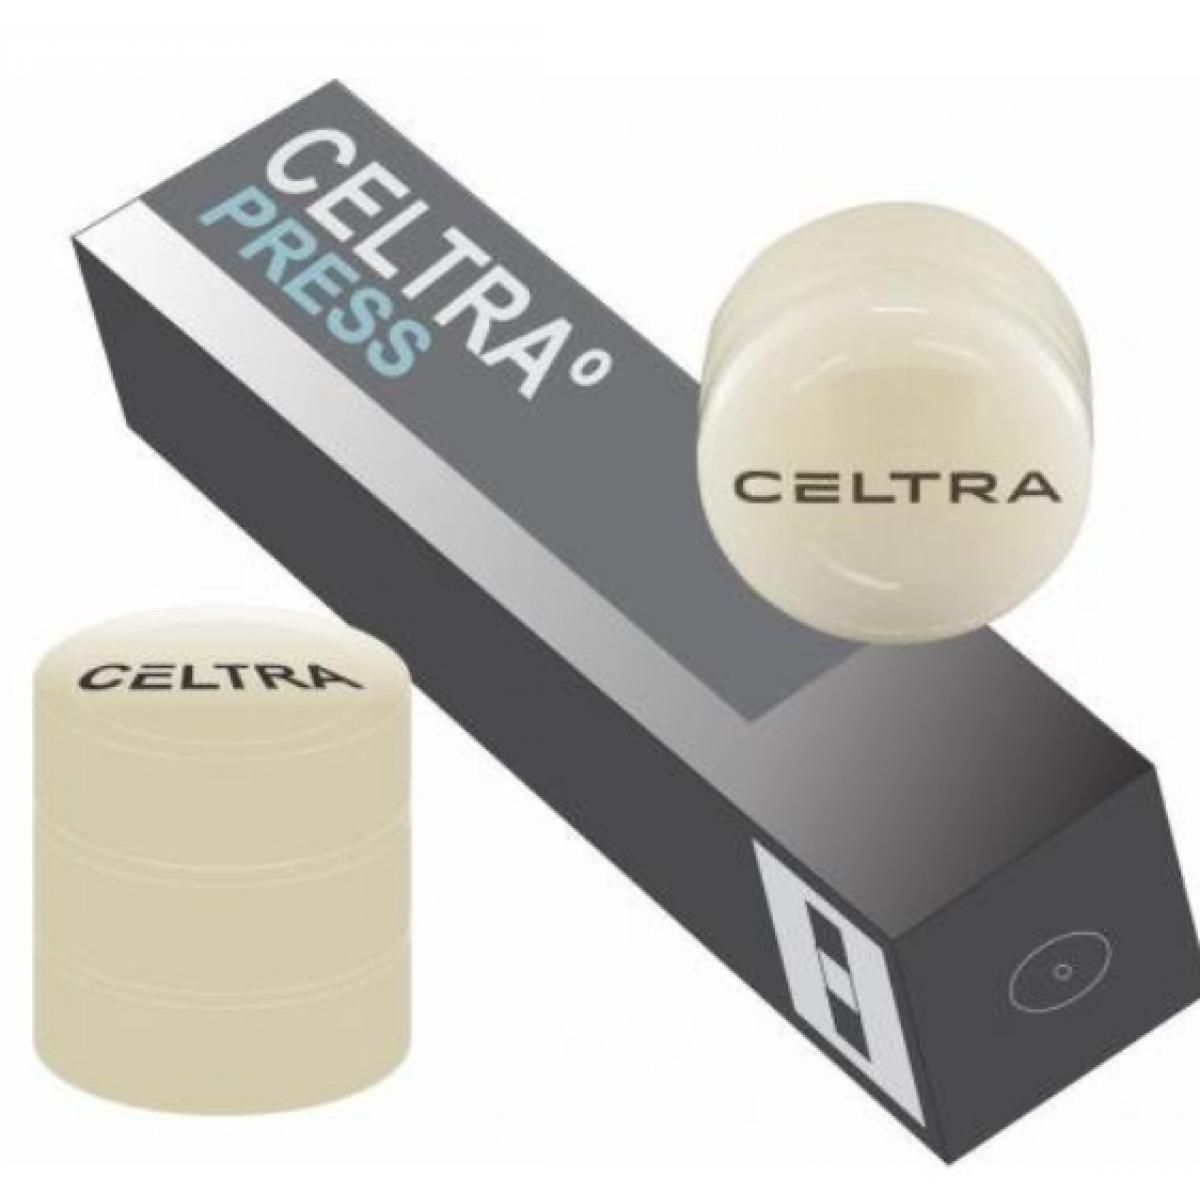 CELTRA PRESS MT C3 5 X 3 GR DENTSPLY -